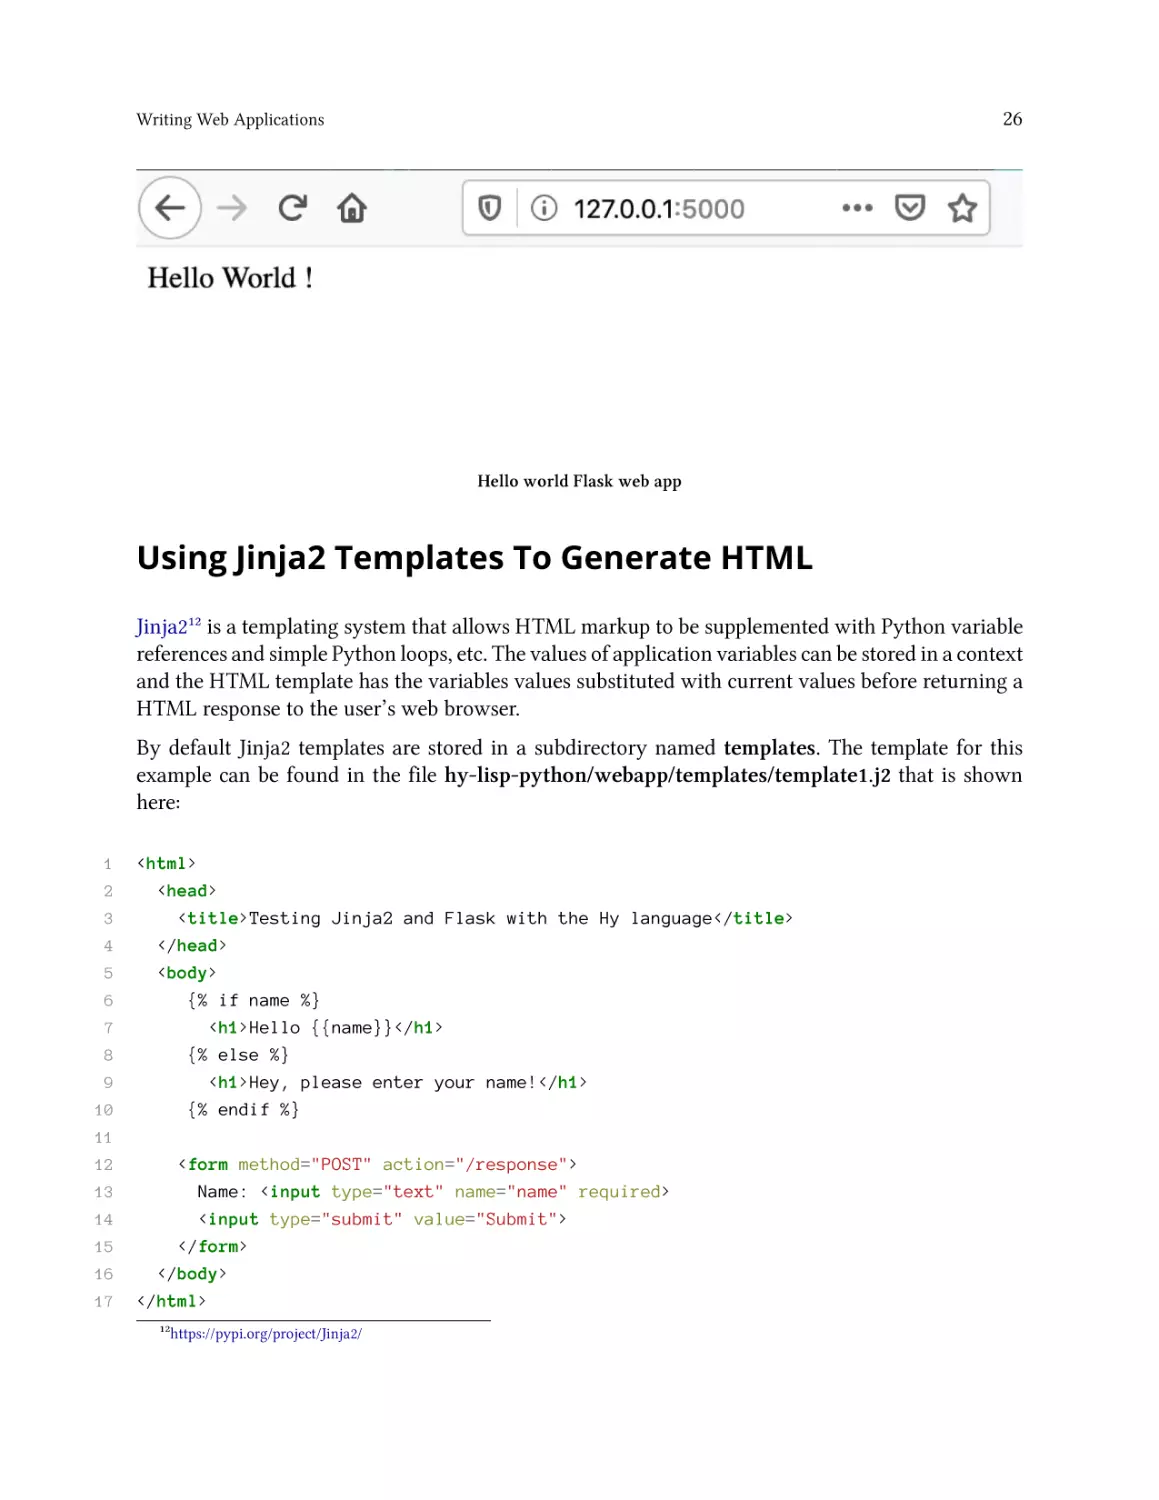 Using Jinja2 Templates To Generate HTML